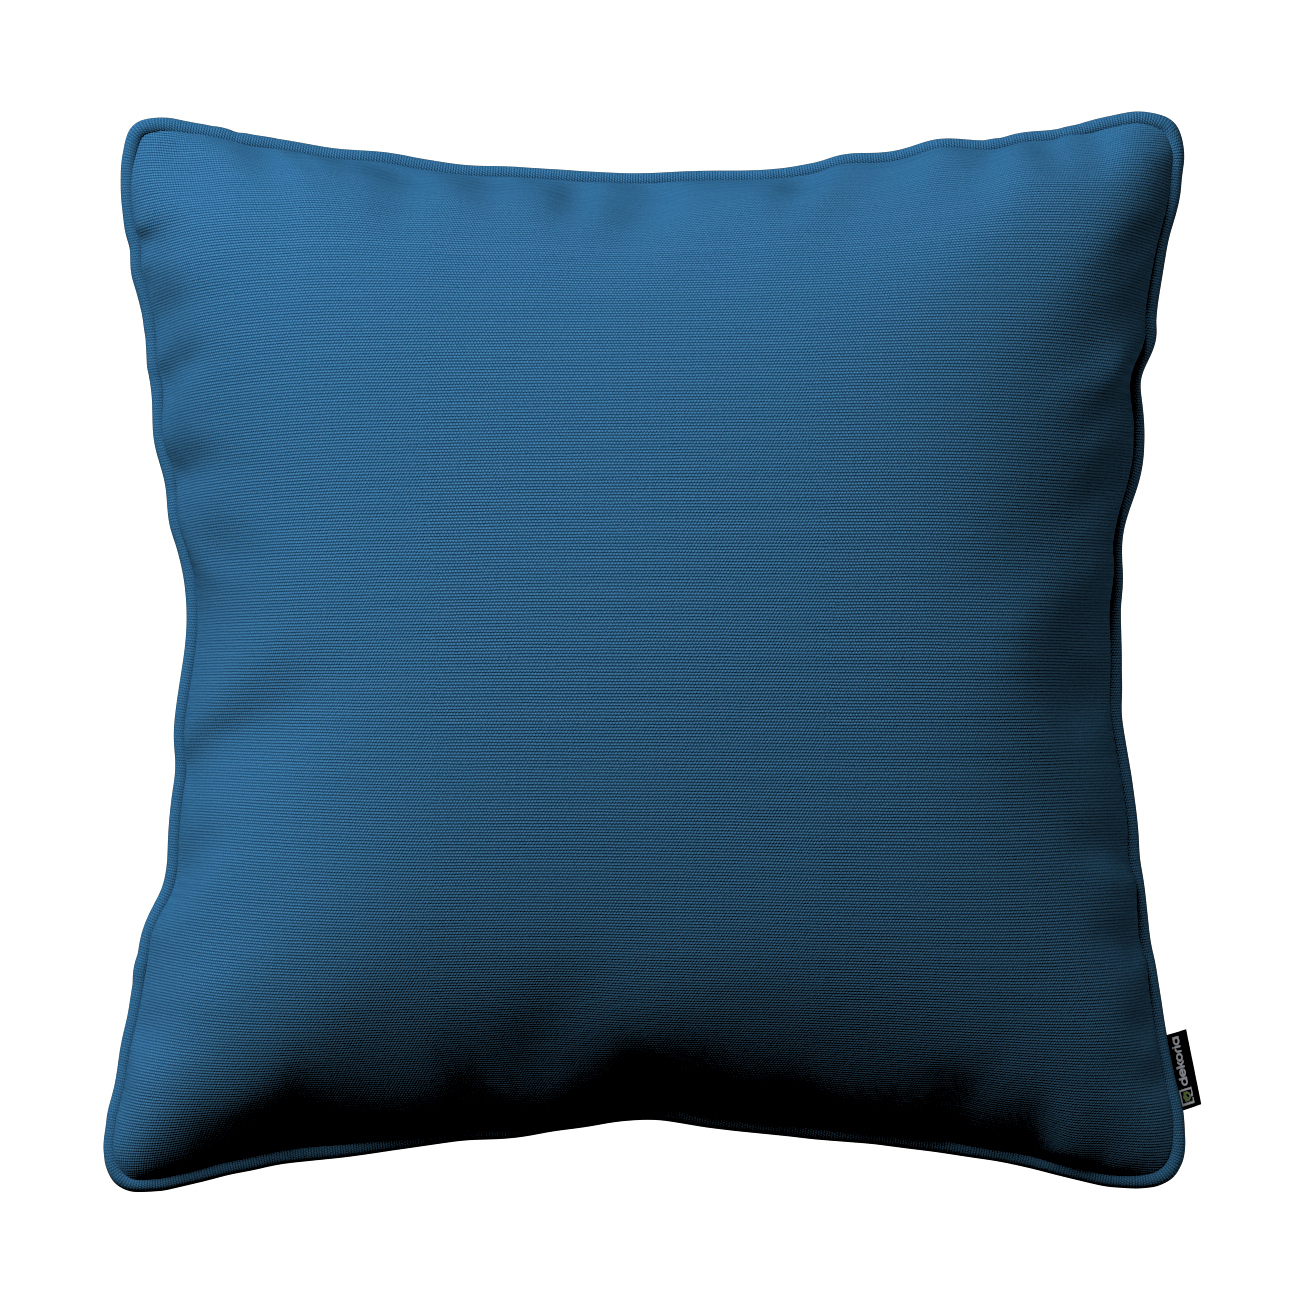 Kissenhülle Gabi mit Paspel, marinenblau , 45 x 45 cm, Cotton Panama (702-4 günstig online kaufen